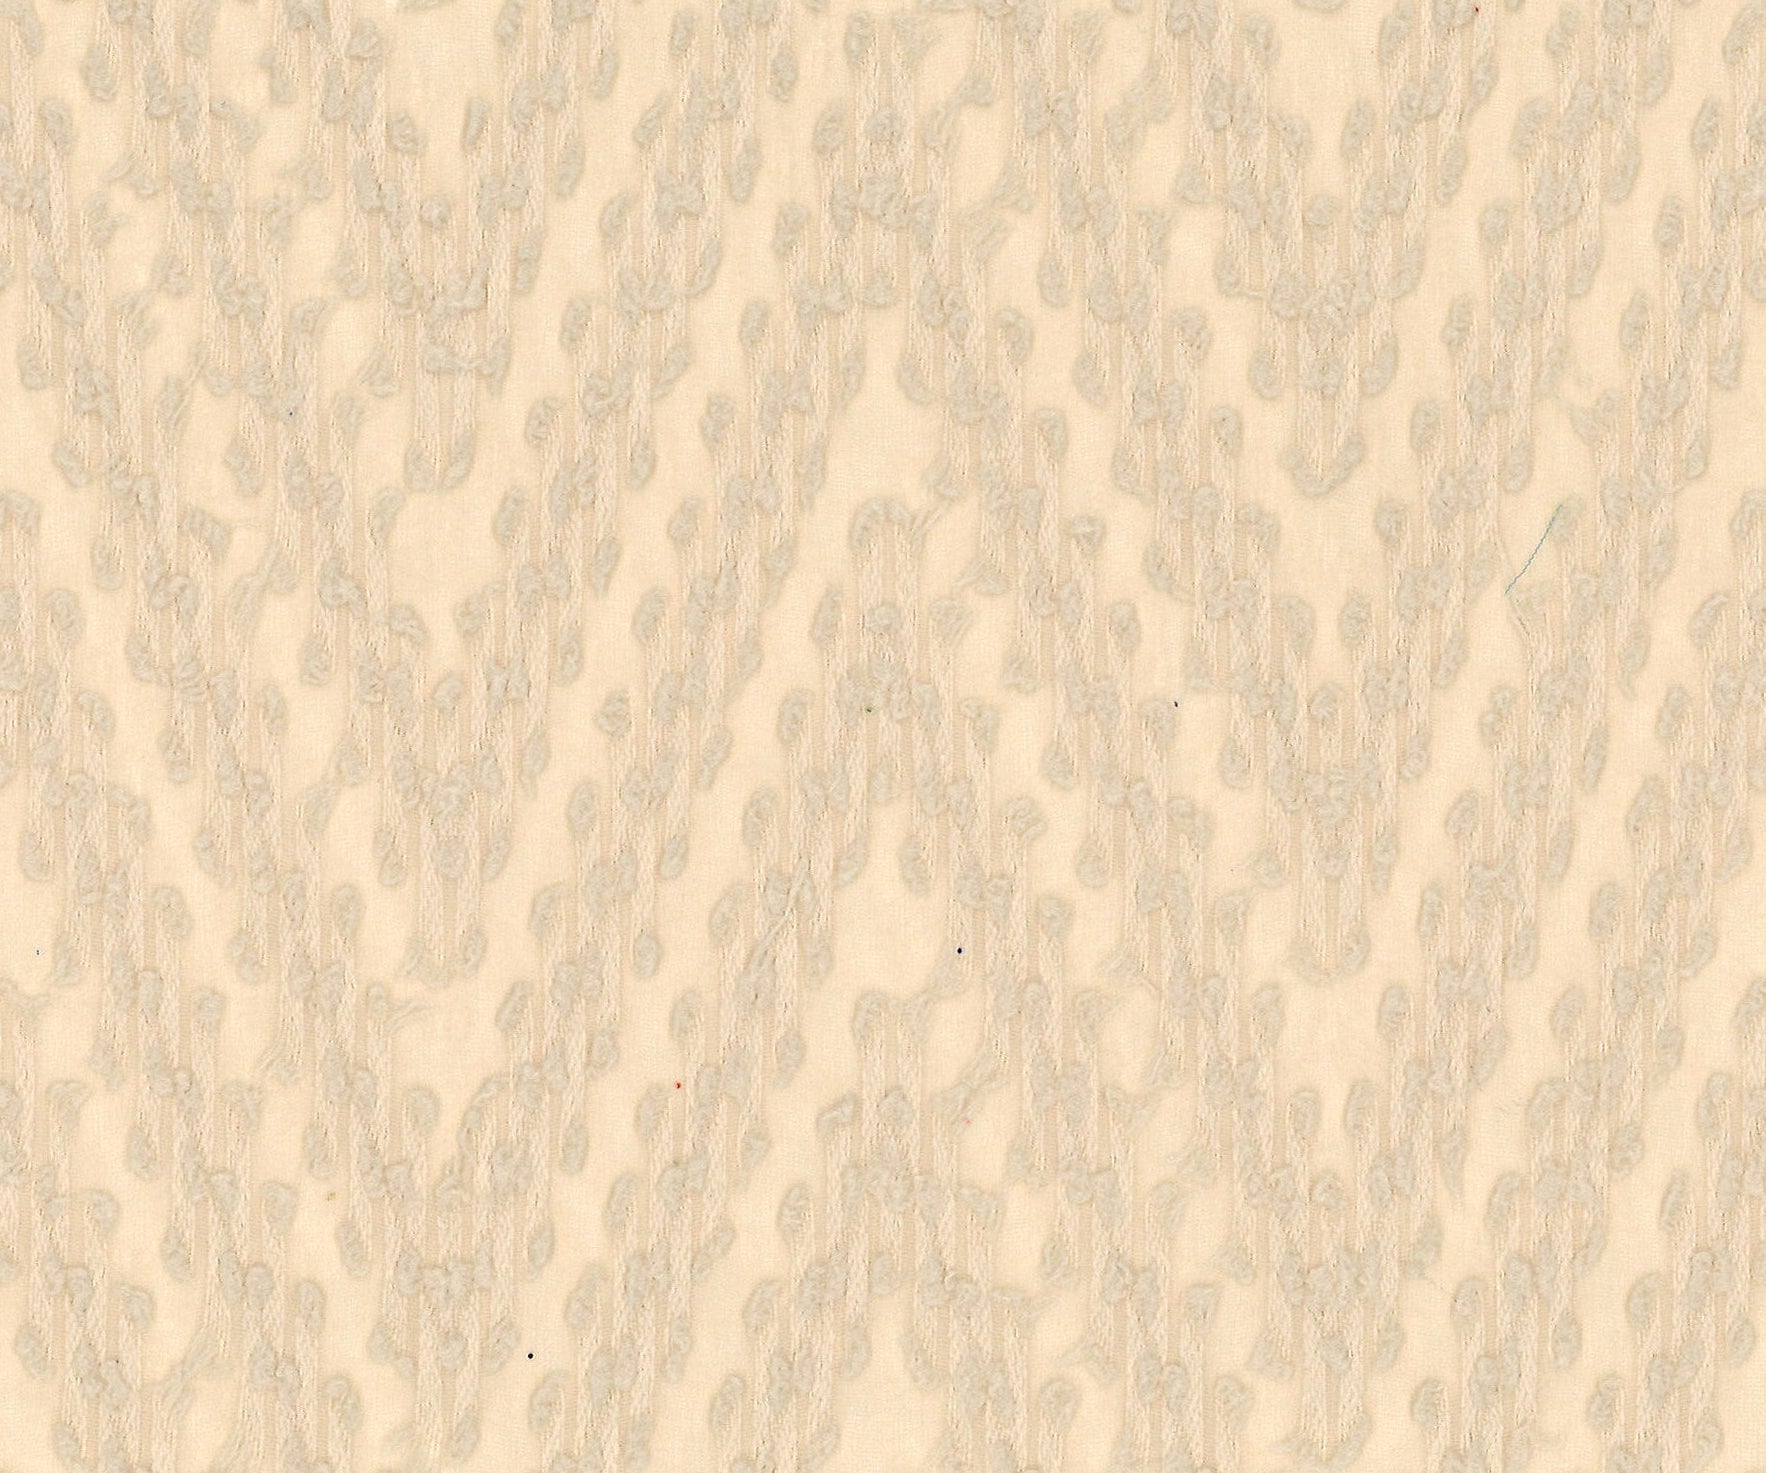 9958-02 Wheat Polyester Chiffon Winding Pattern Jacquard Plain Dyed 100% 110g/yd 58" beige chiffon jacquard plain dyed polyester woven Chiffon, Jacquard - knit fabric - woven fabric - fabric company - fabric wholesale - fabric b2b - fabric factory - high quality fabric - hong kong fabric - fabric hk - acetate fabric - cotton fabric - linen fabric - metallic fabric - nylon fabric - polyester fabric - spandex fabric - chun wing hing - cwh hk - fabric worldwide ship - 針織布 - 梳織布 - 布料公司- 布料批發 - 香港布料 - 秦榮興